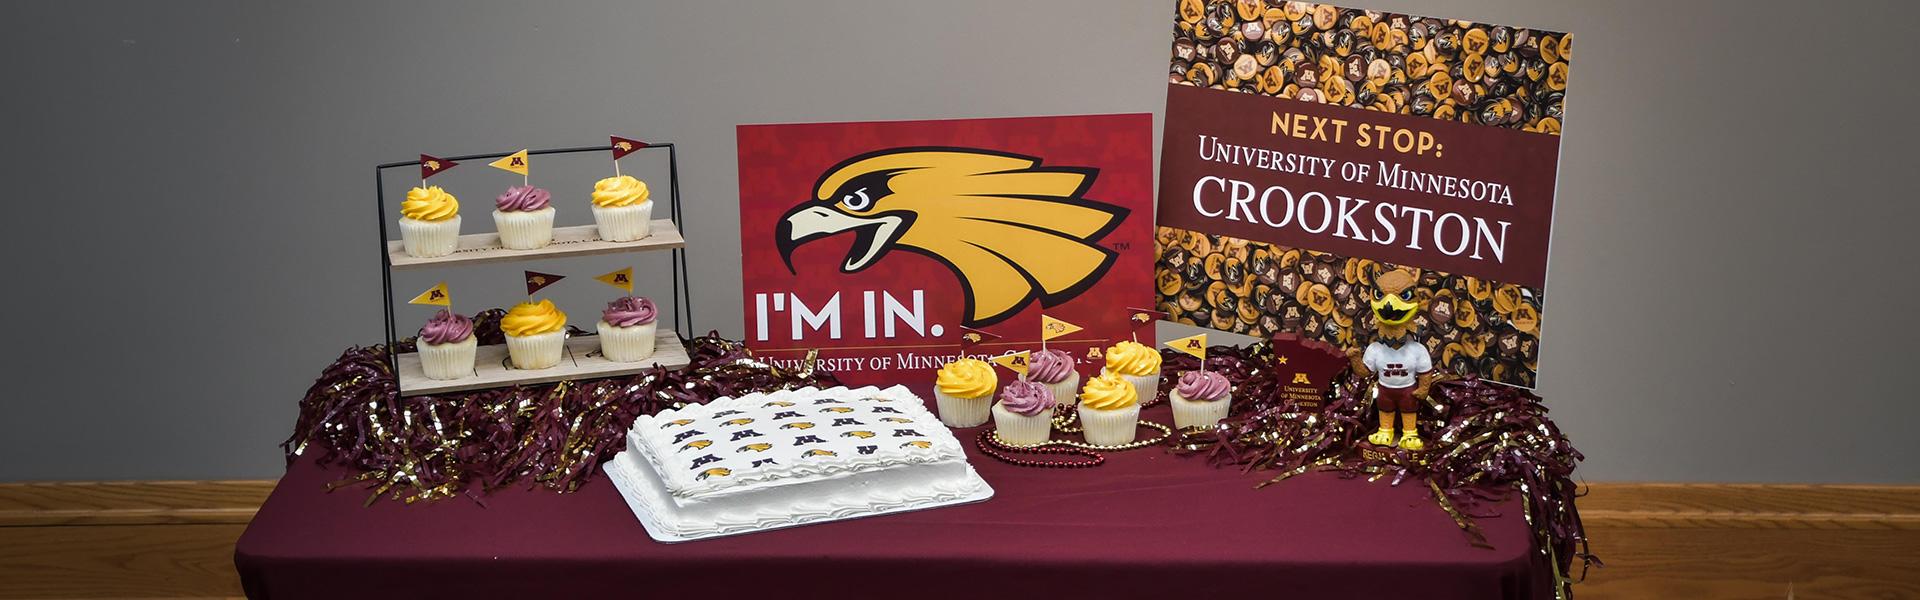 UMN Crookston Graduation Party Display with cupcake flags, cake design, and signage